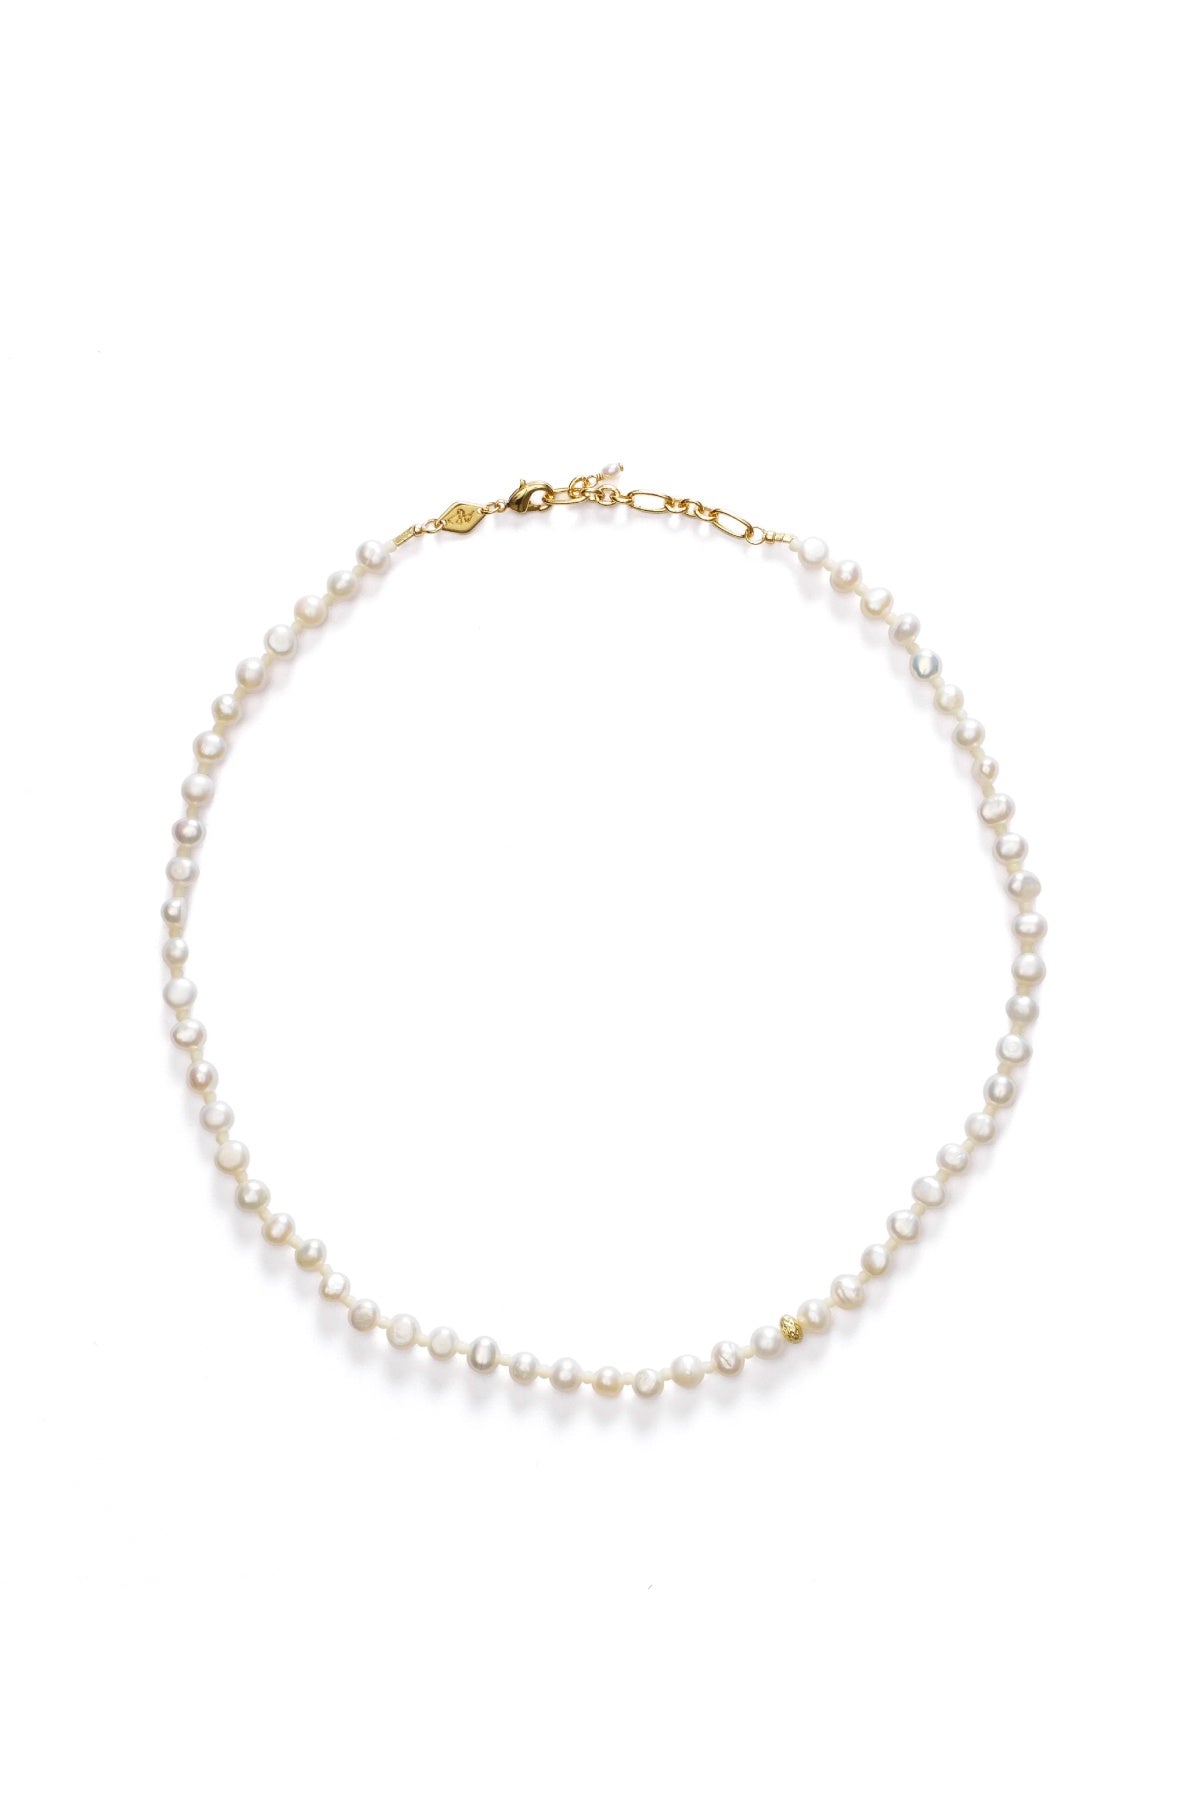 Anni Lu Petit Stellar Pearly Necklace - Gold